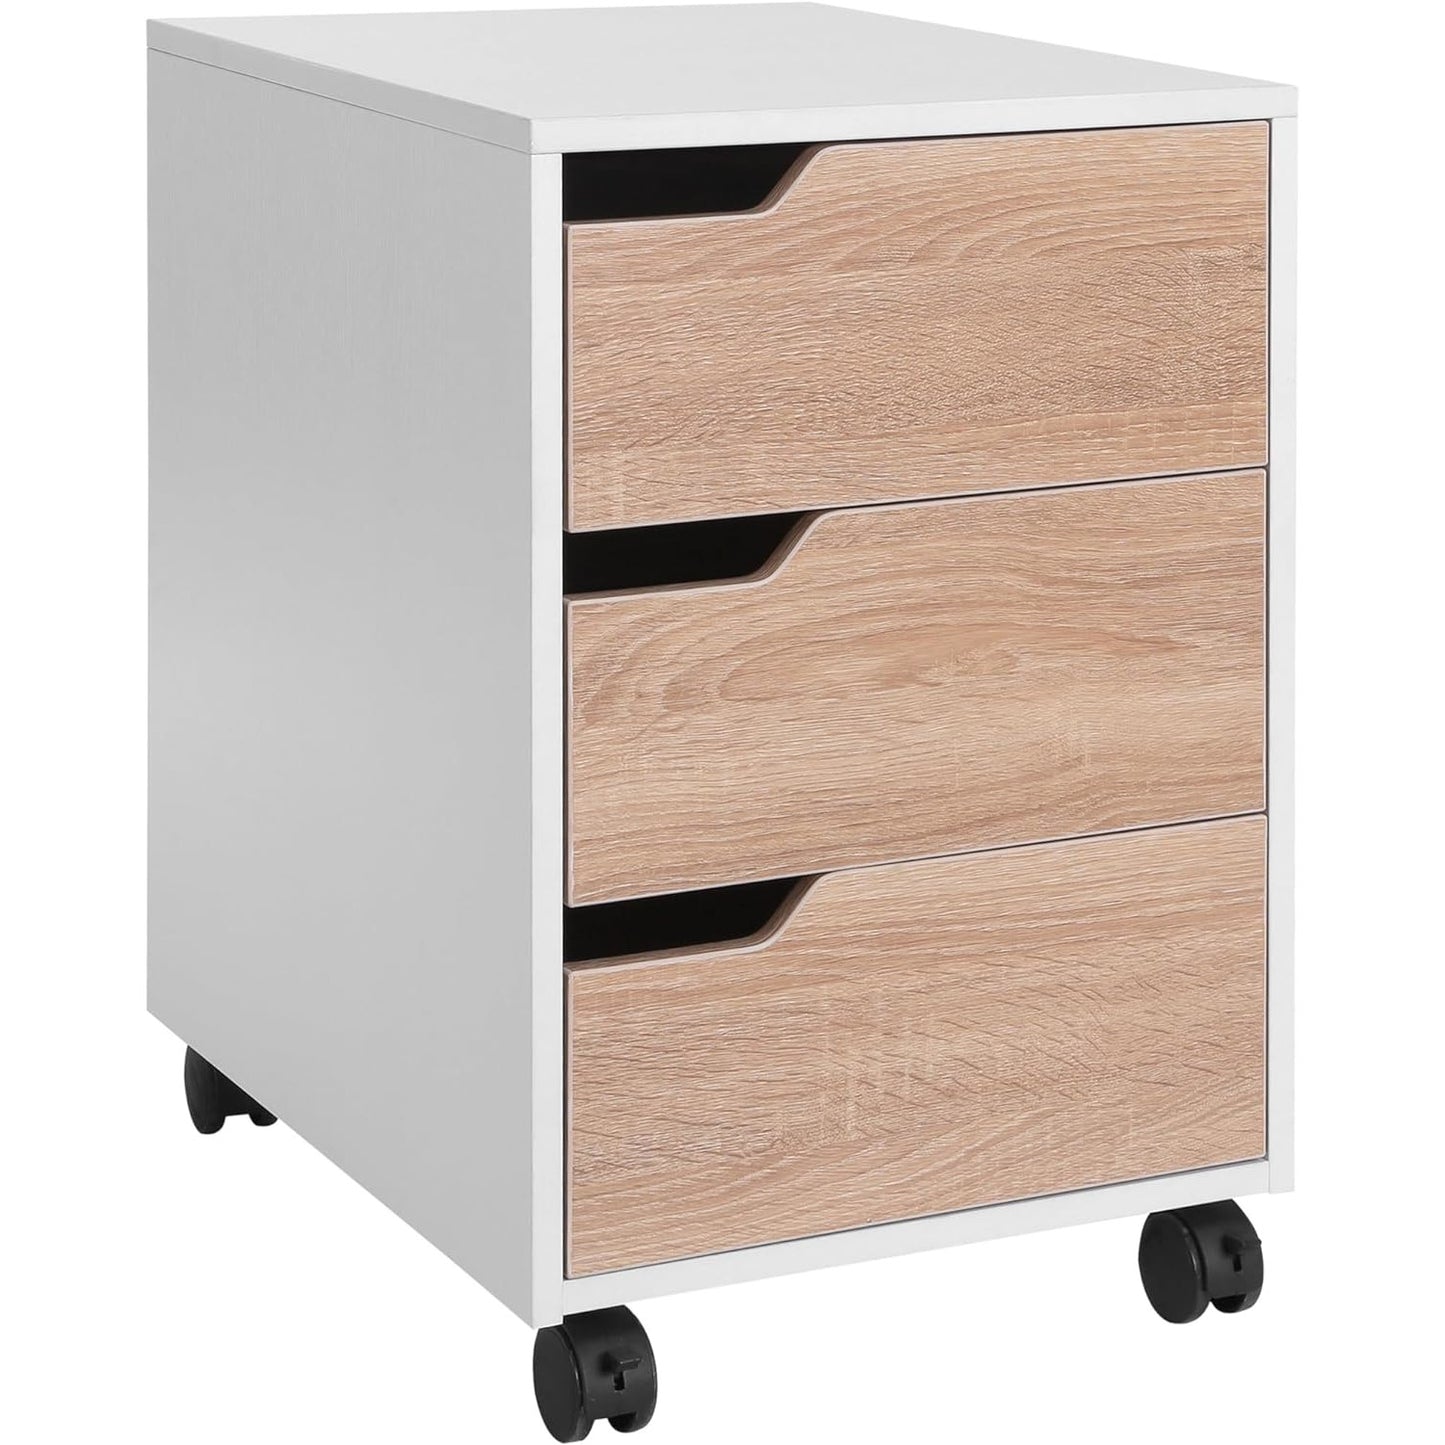 ProperAV Extra 3 Drawer Mobile Filing Cabinet with Wheels - White & Oak - maplin.co.uk